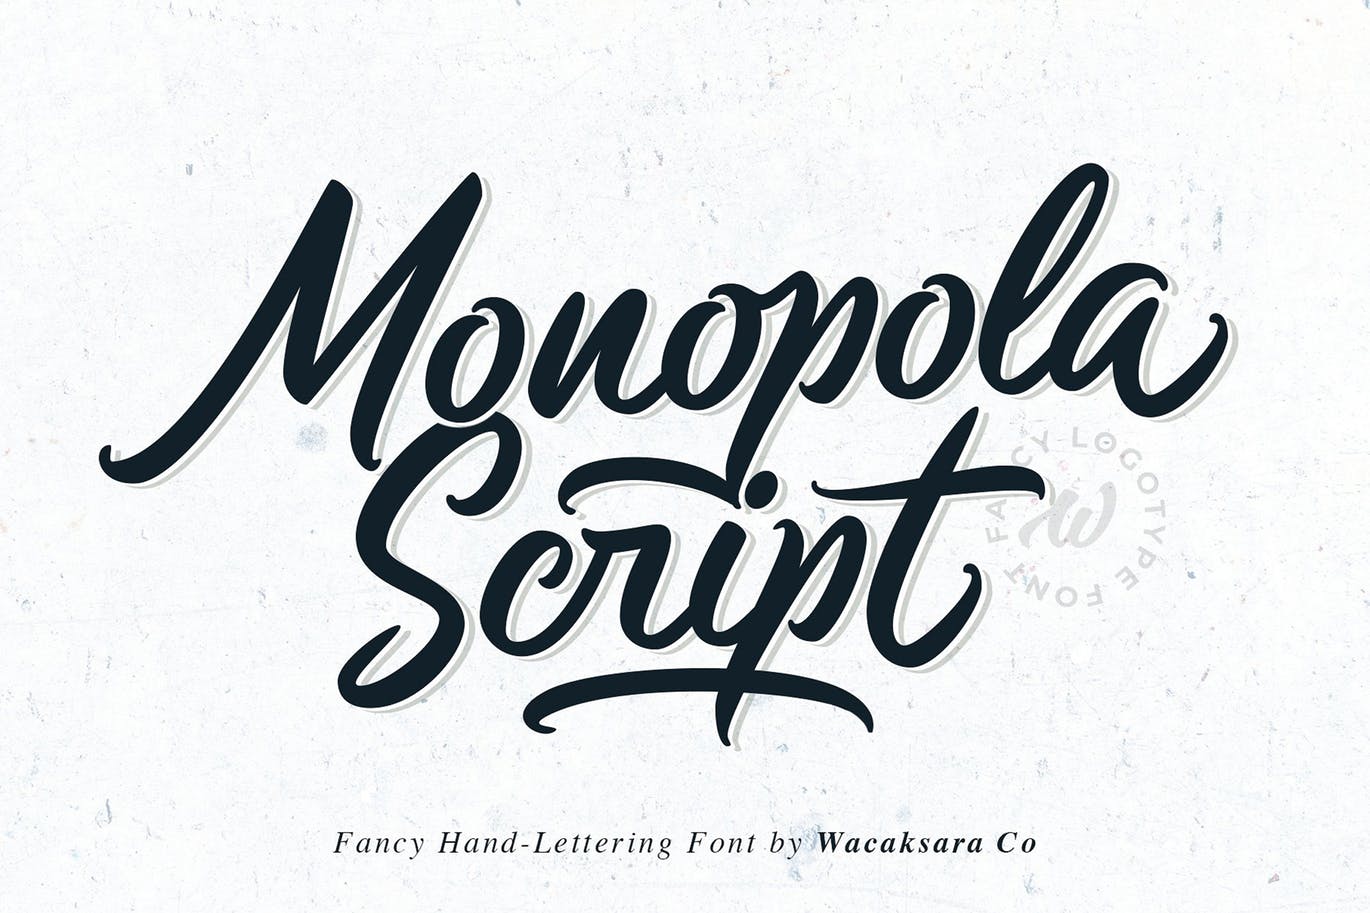 Monopola Script fancy font for logos